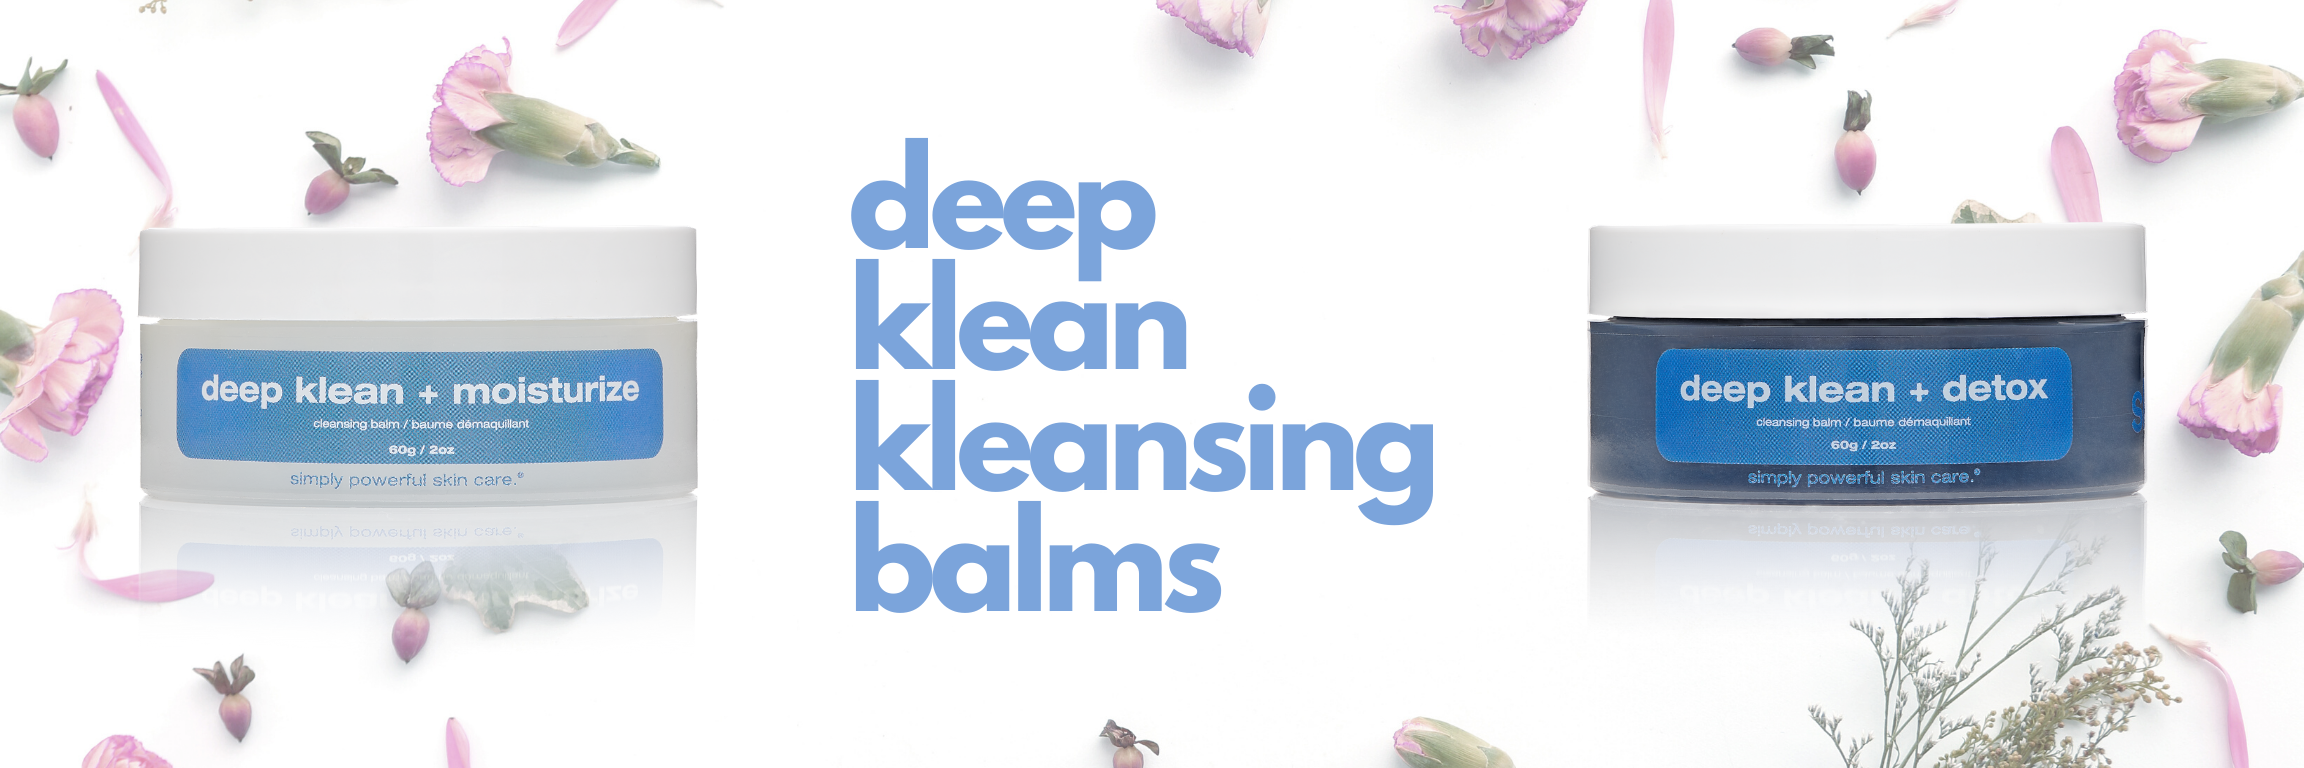 product focus: deep klean kleansing balms